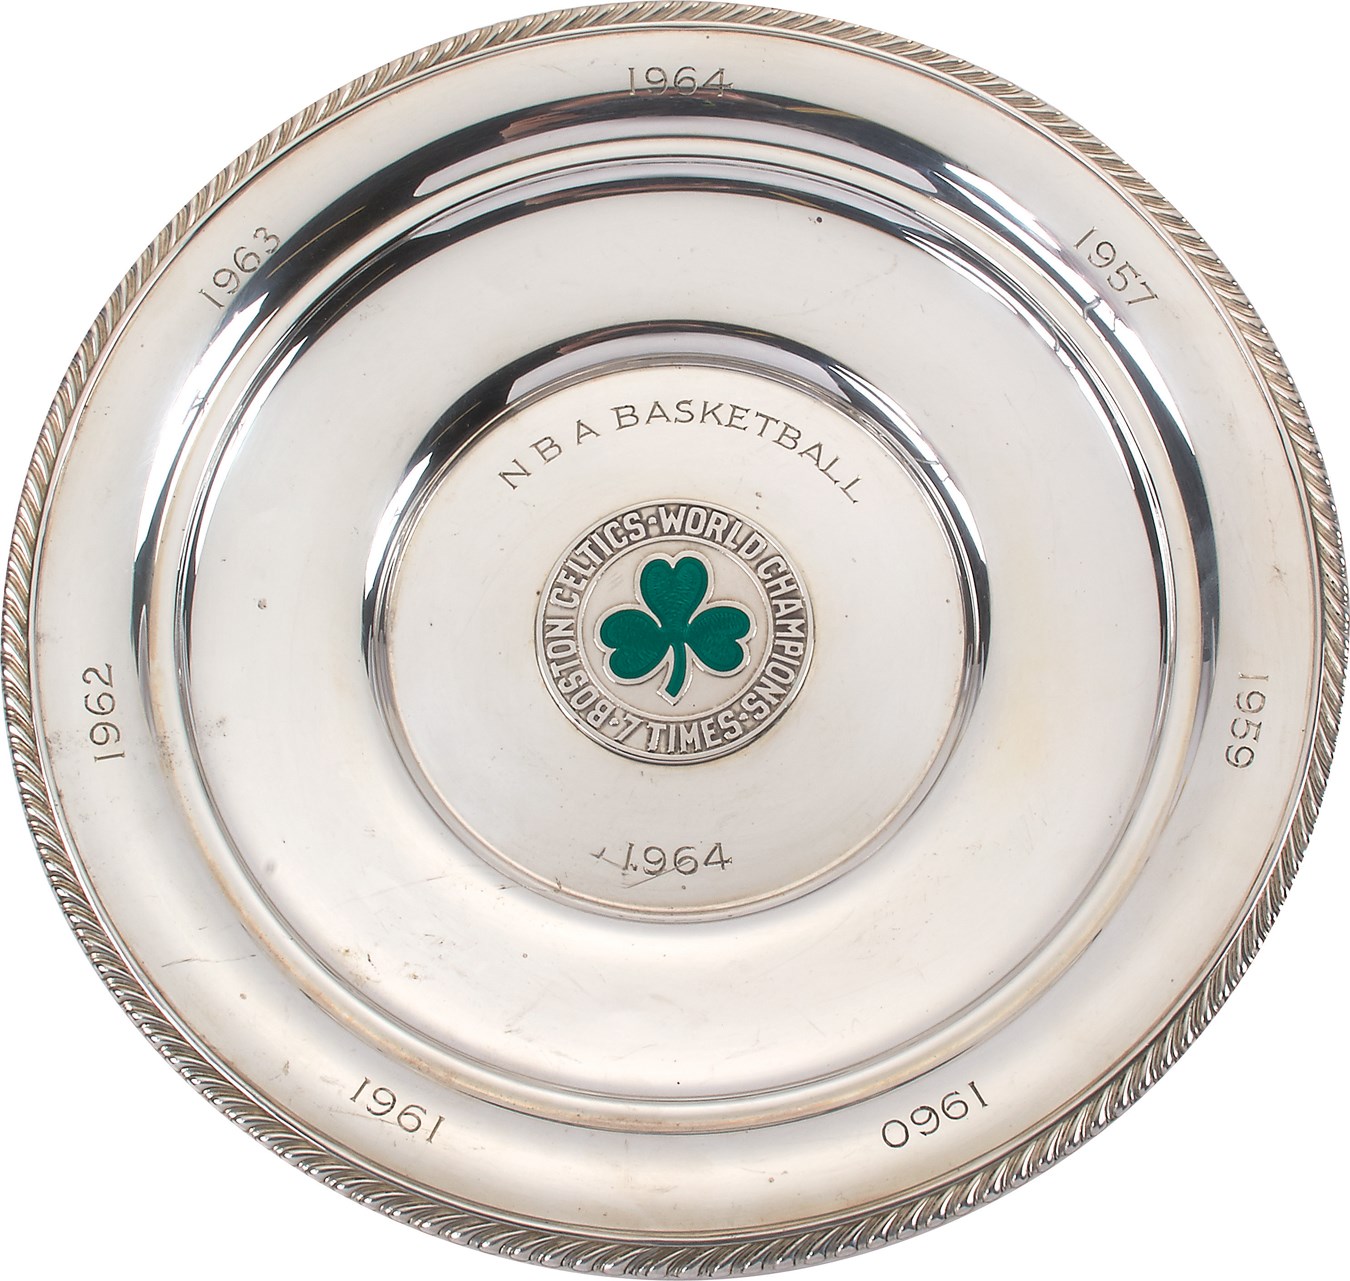 - 1964 Boston Celtics 7 Times World Champions Award Presented to Frank Ramsey